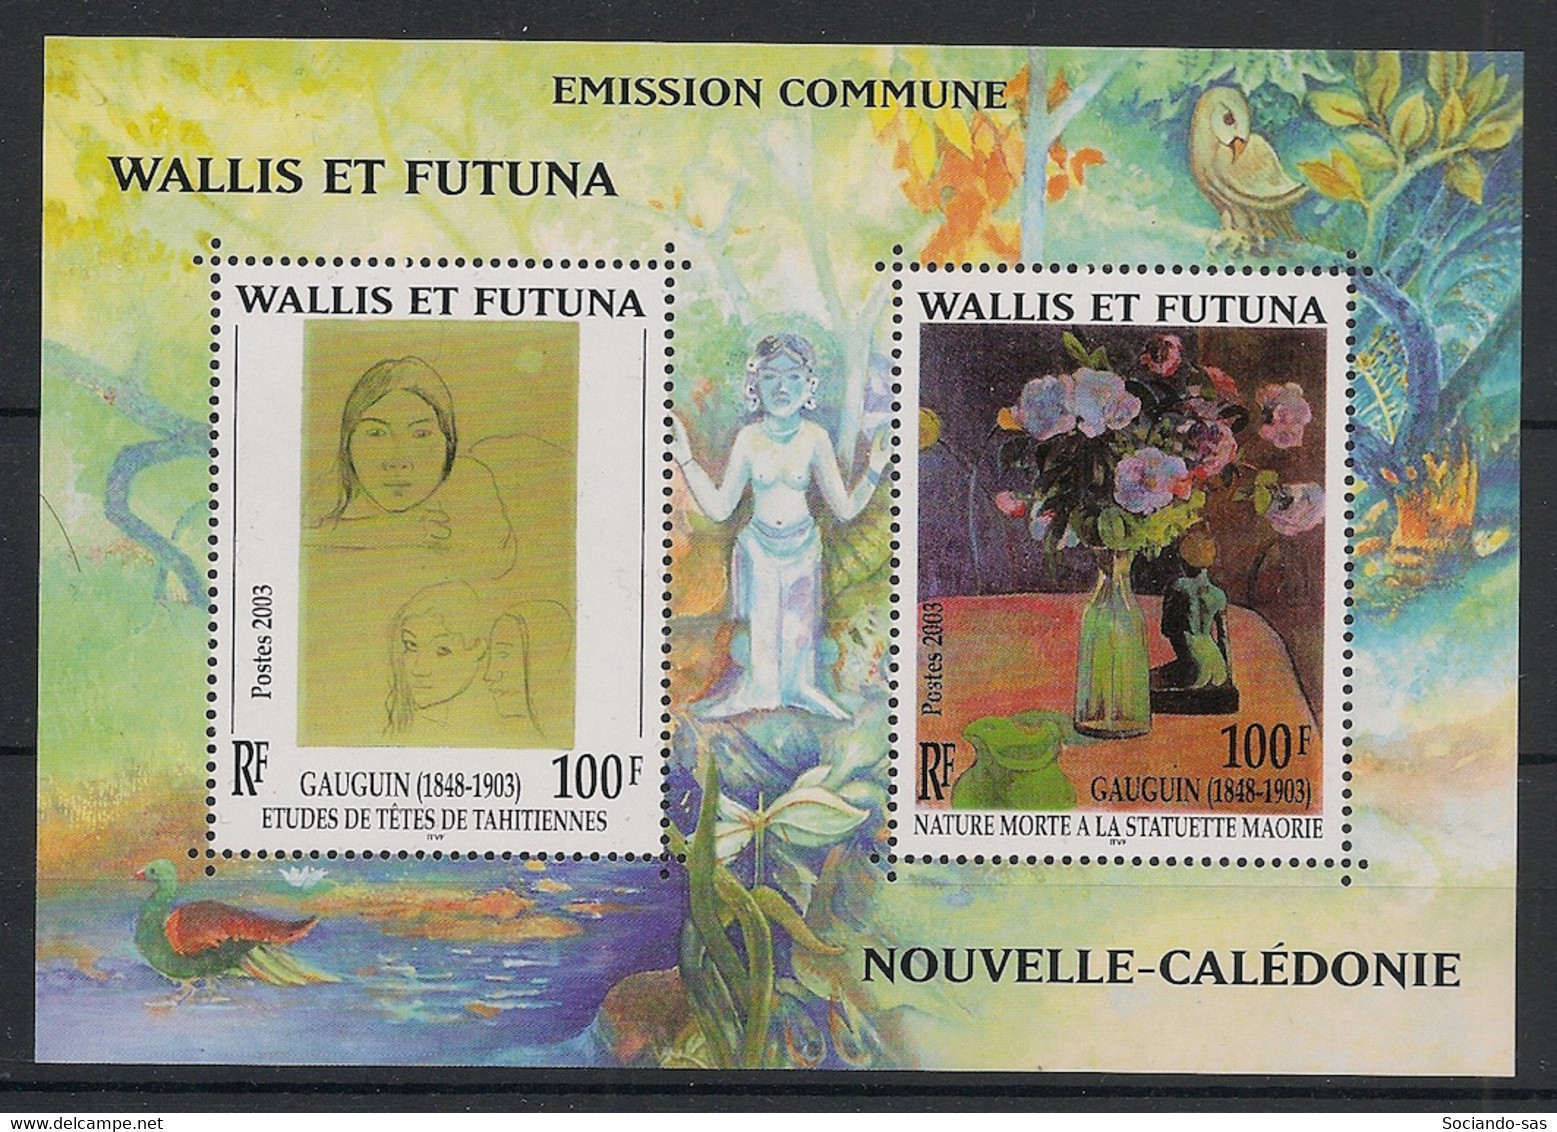 WALLIS ET FUTUNA - 2003 - Bloc Feuillet BF N°YT. 13 - Gauguin - Neuf Luxe ** / MNH / Postfrisch - Hojas Y Bloques